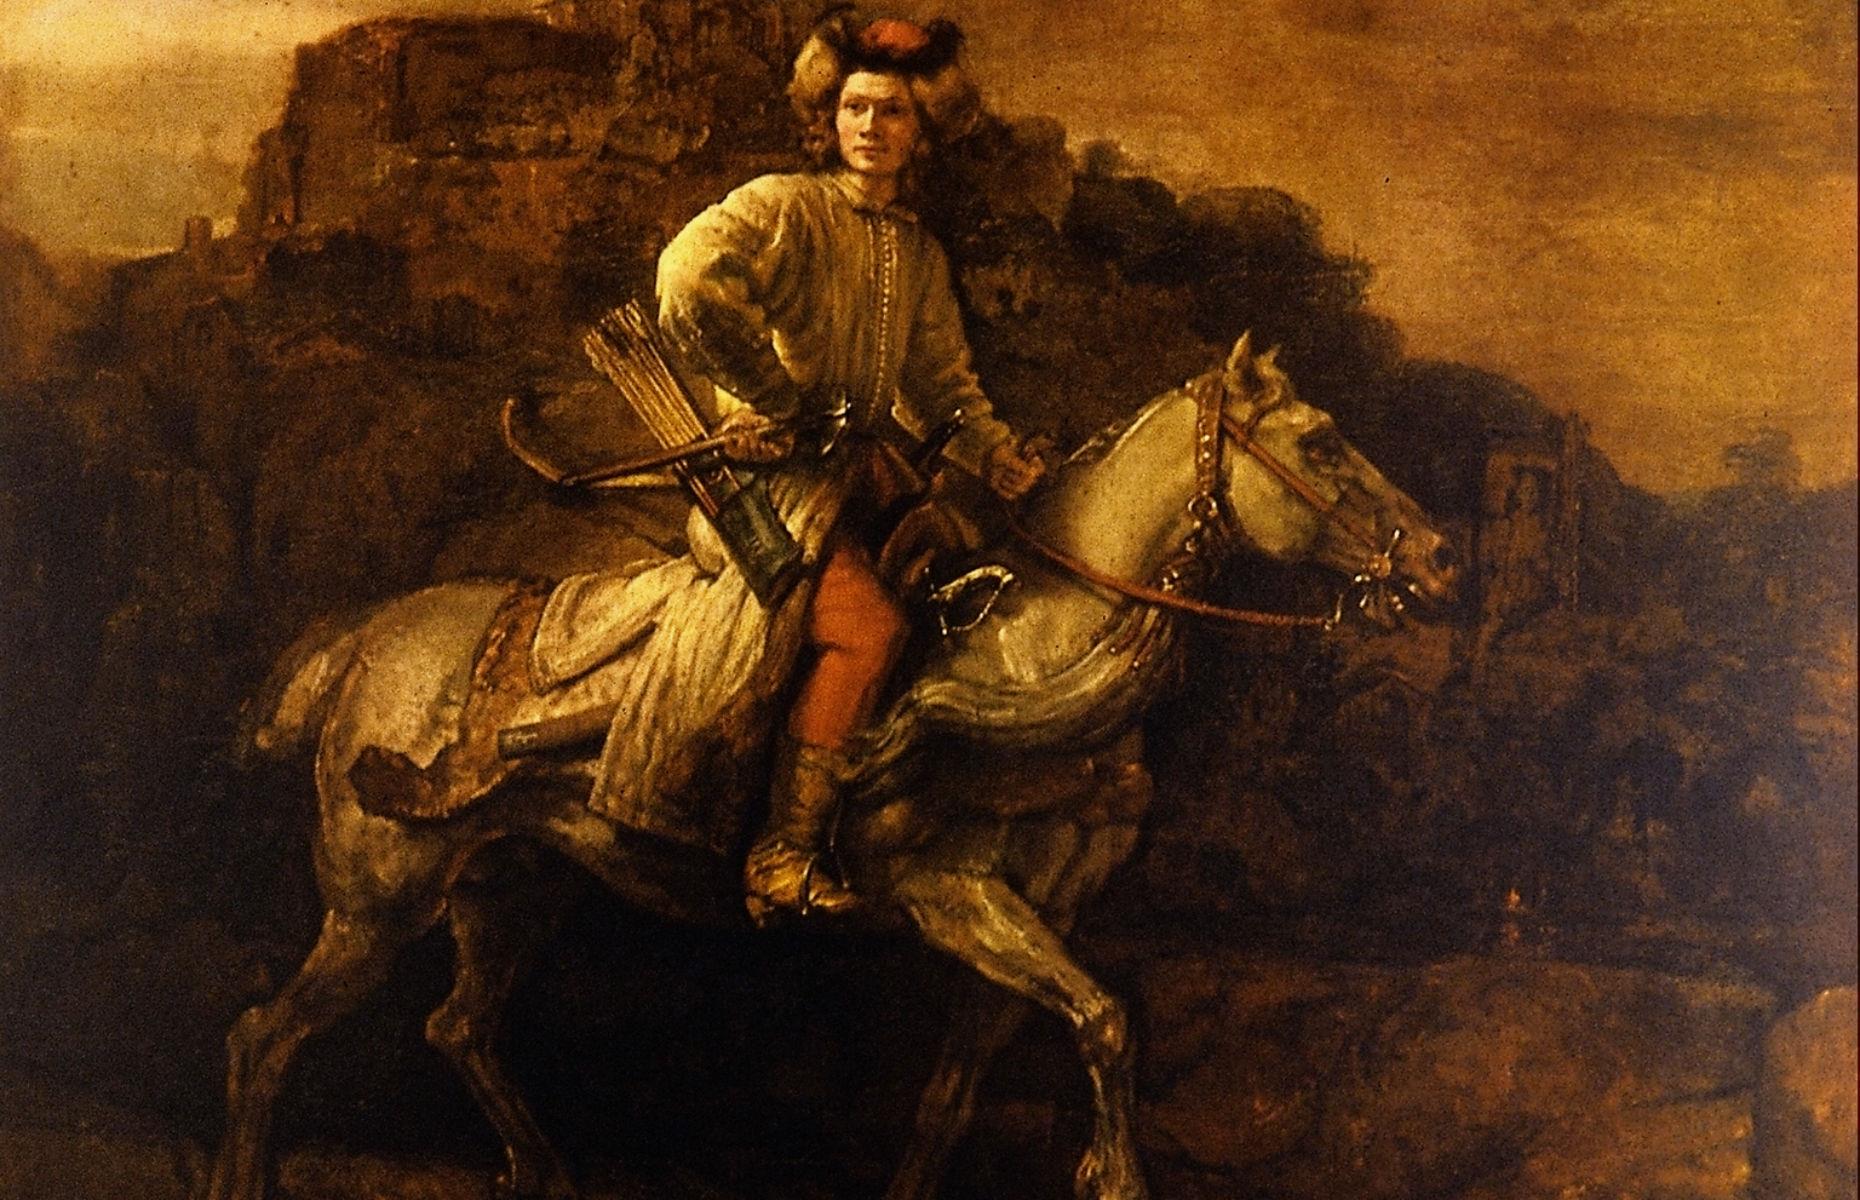 Rembrandt's The Polish Rider